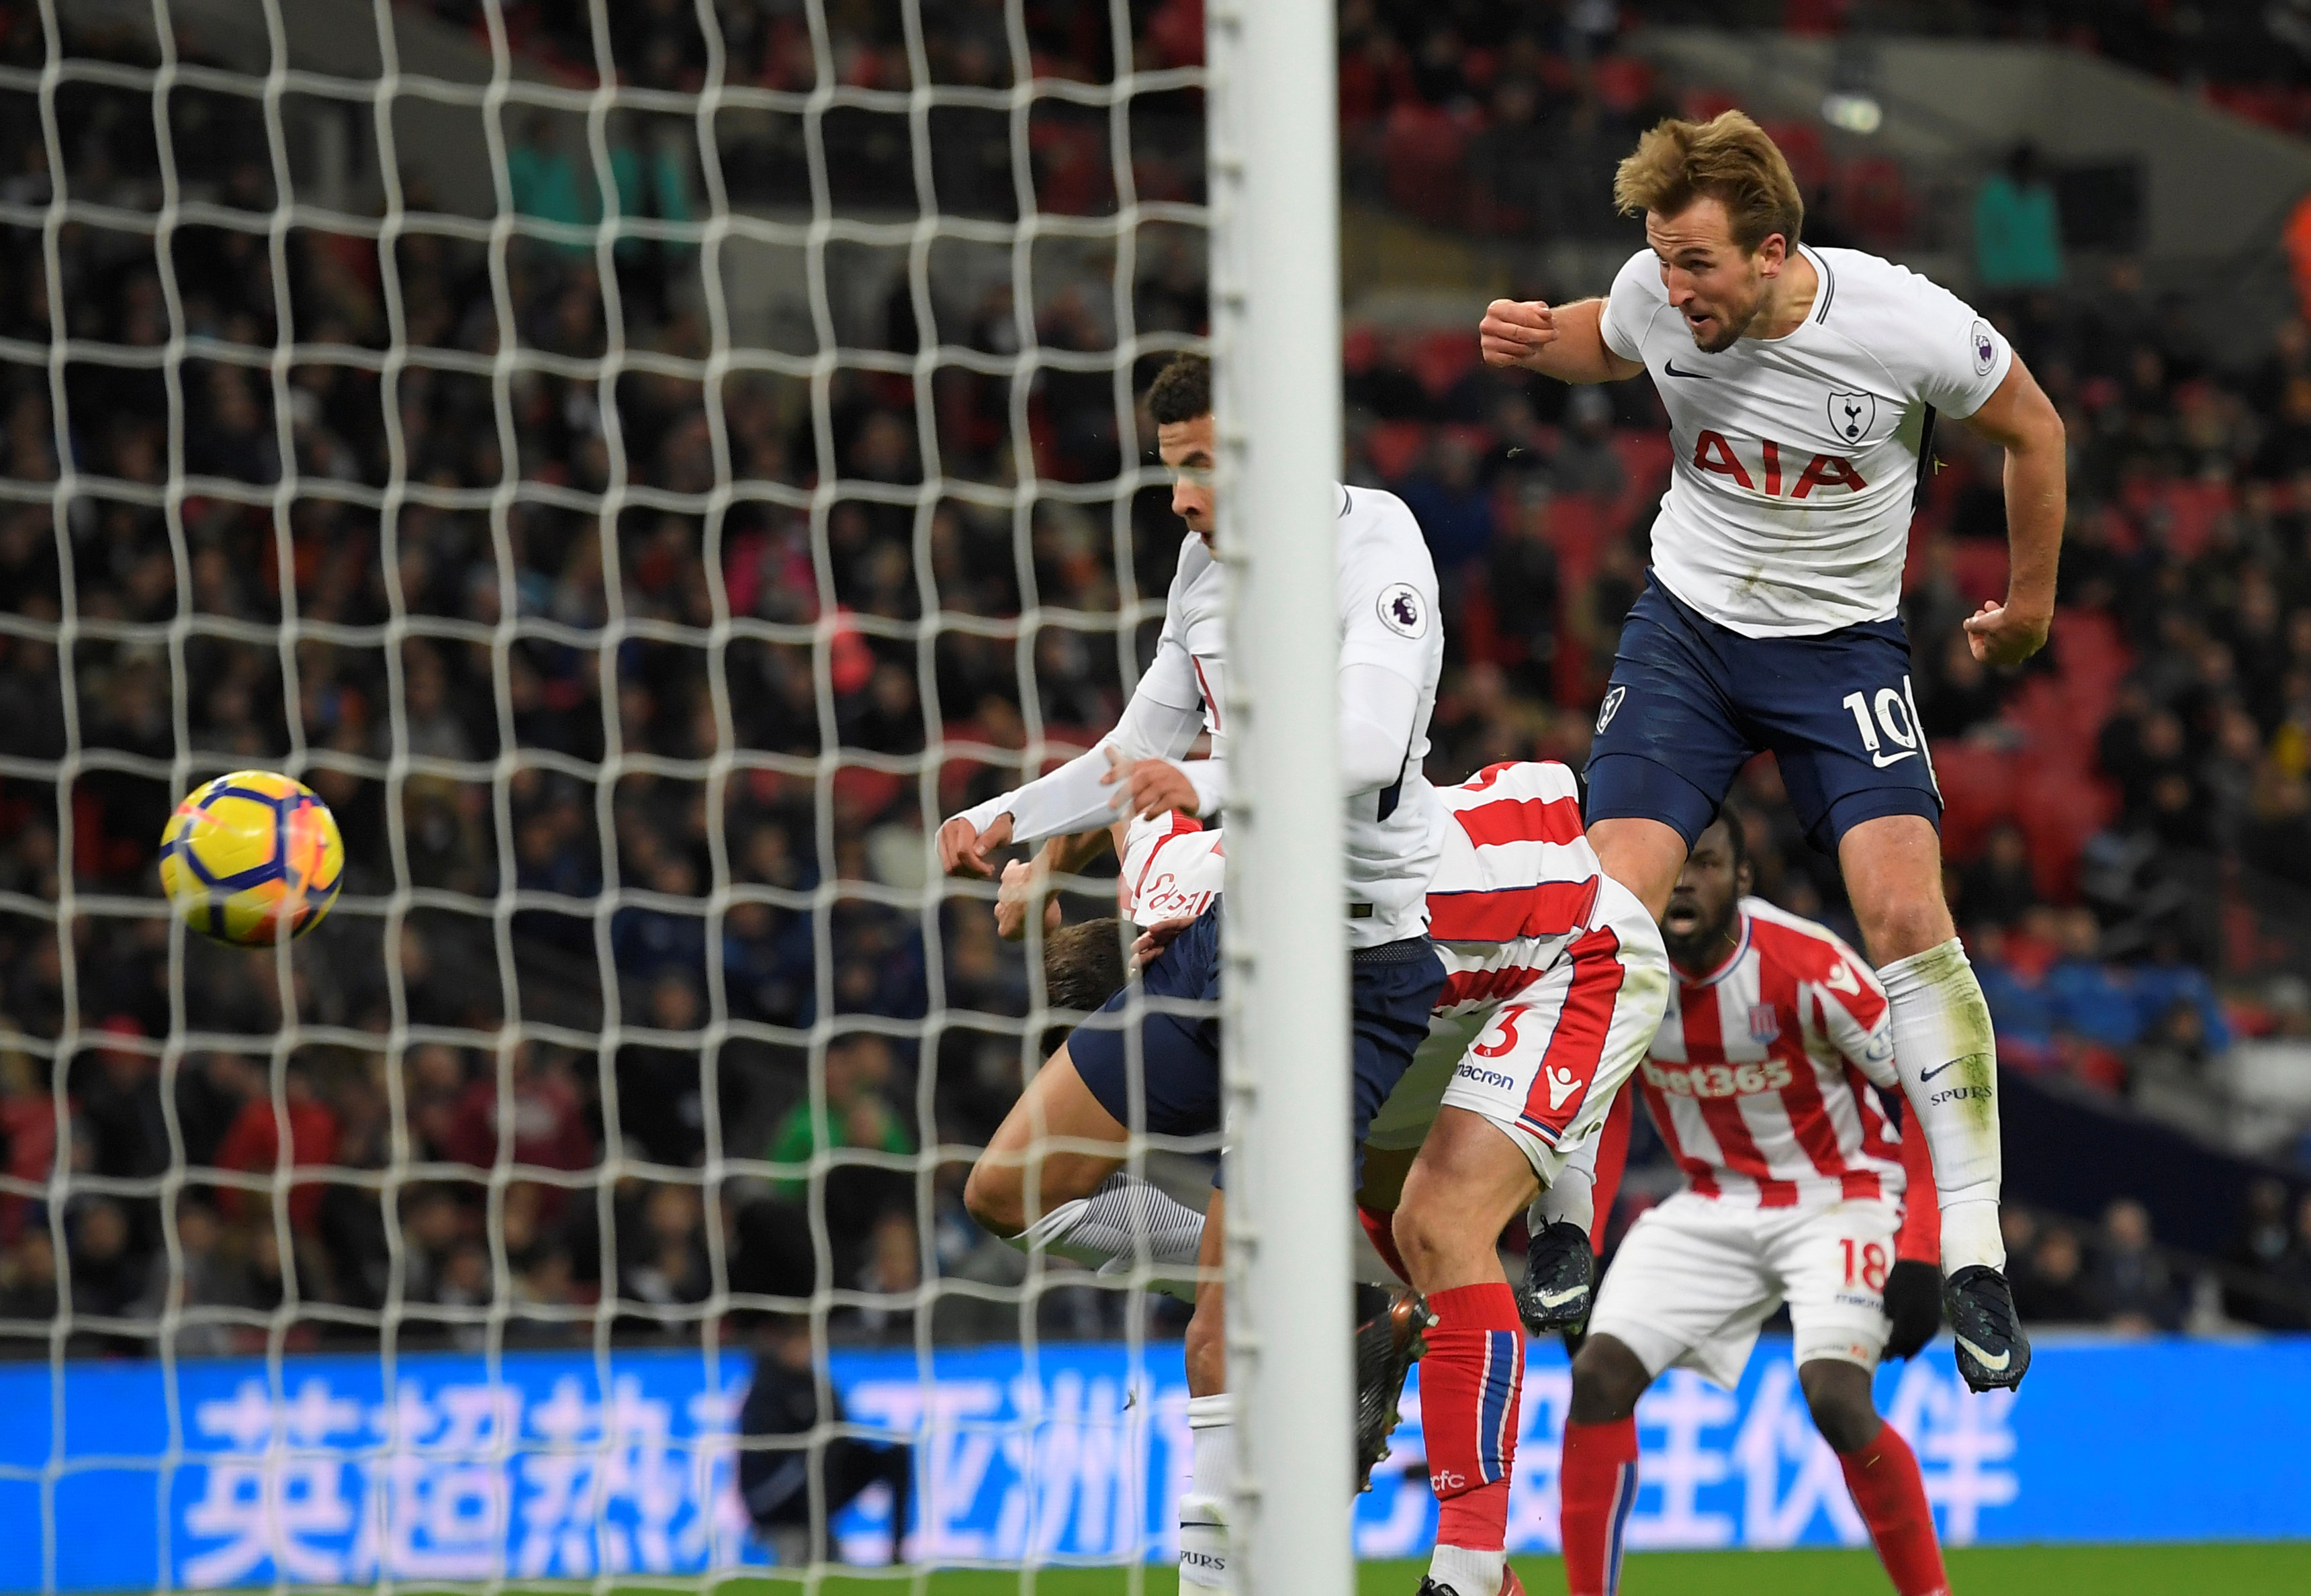 Football: Kane scores twice as Tottenham thrash Stoke